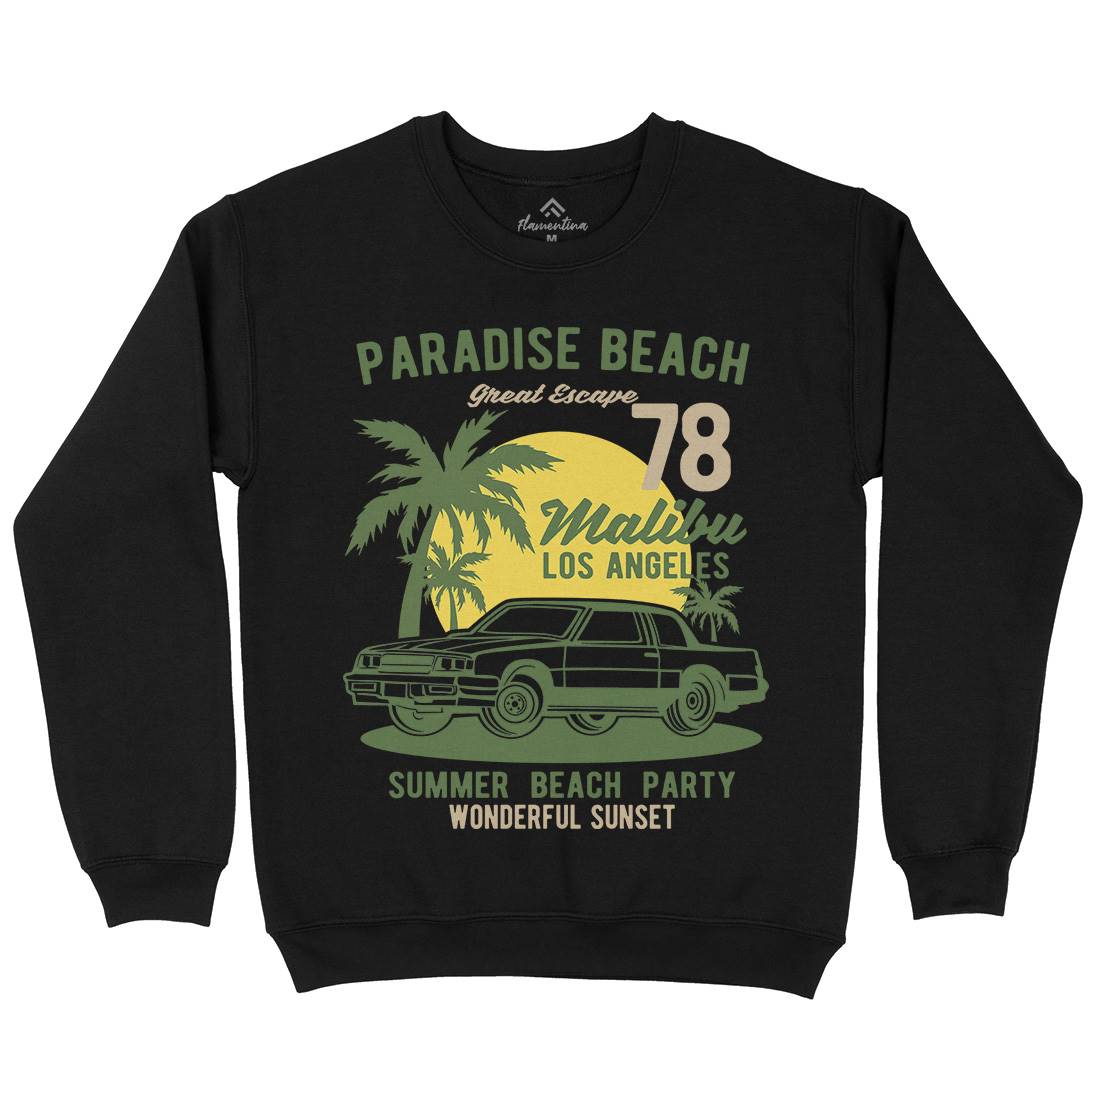 Paradise Beach Kids Crew Neck Sweatshirt Cars B244